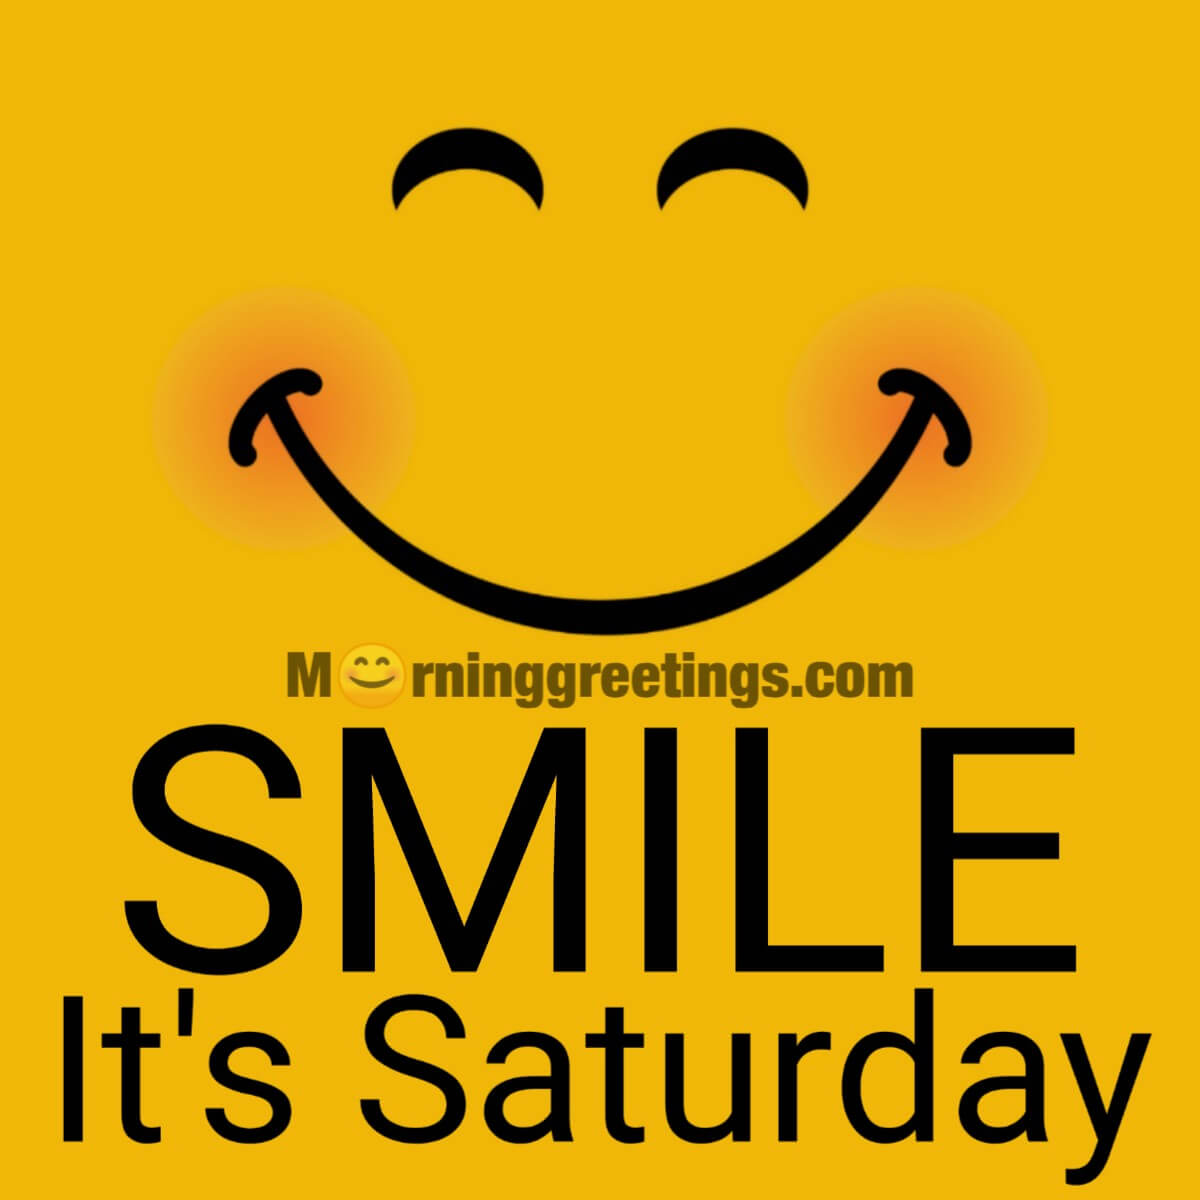 Smile It’s Saturday